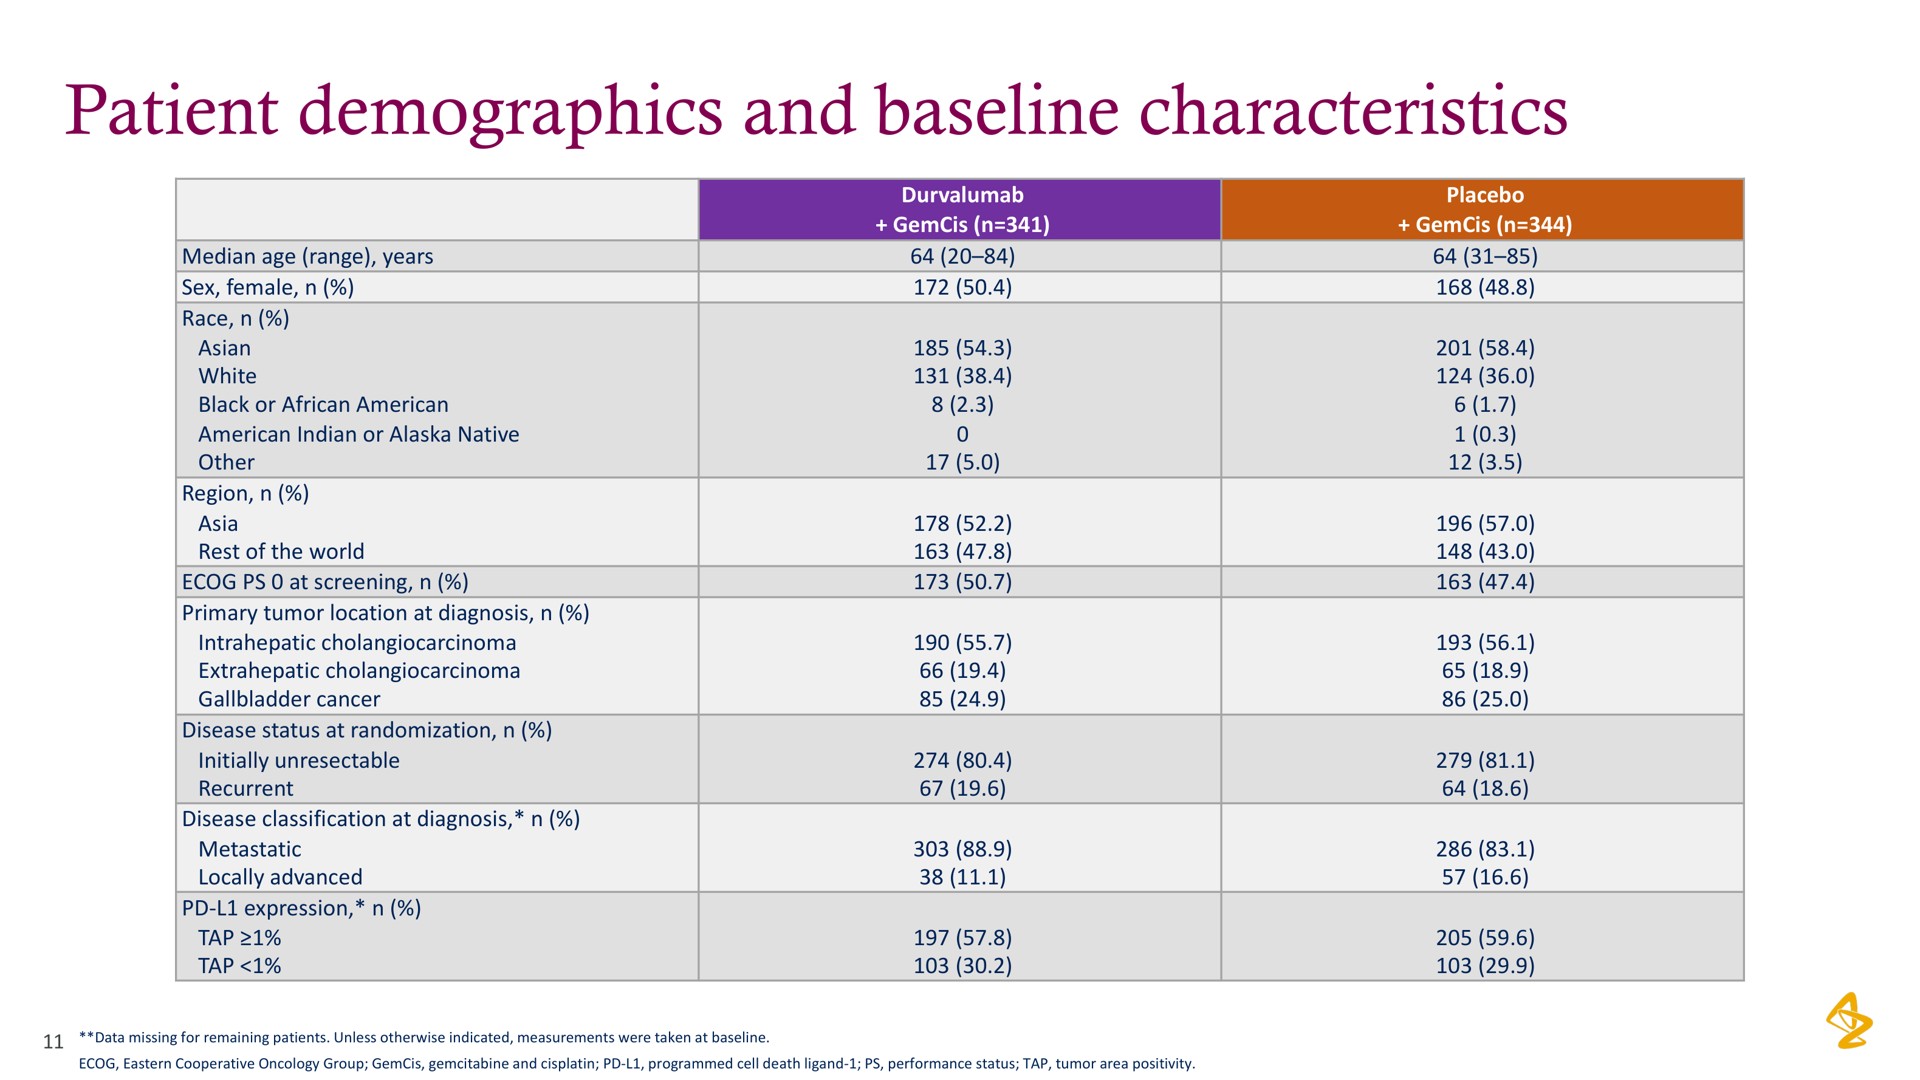 patient demographics and characteristics | AstraZeneca